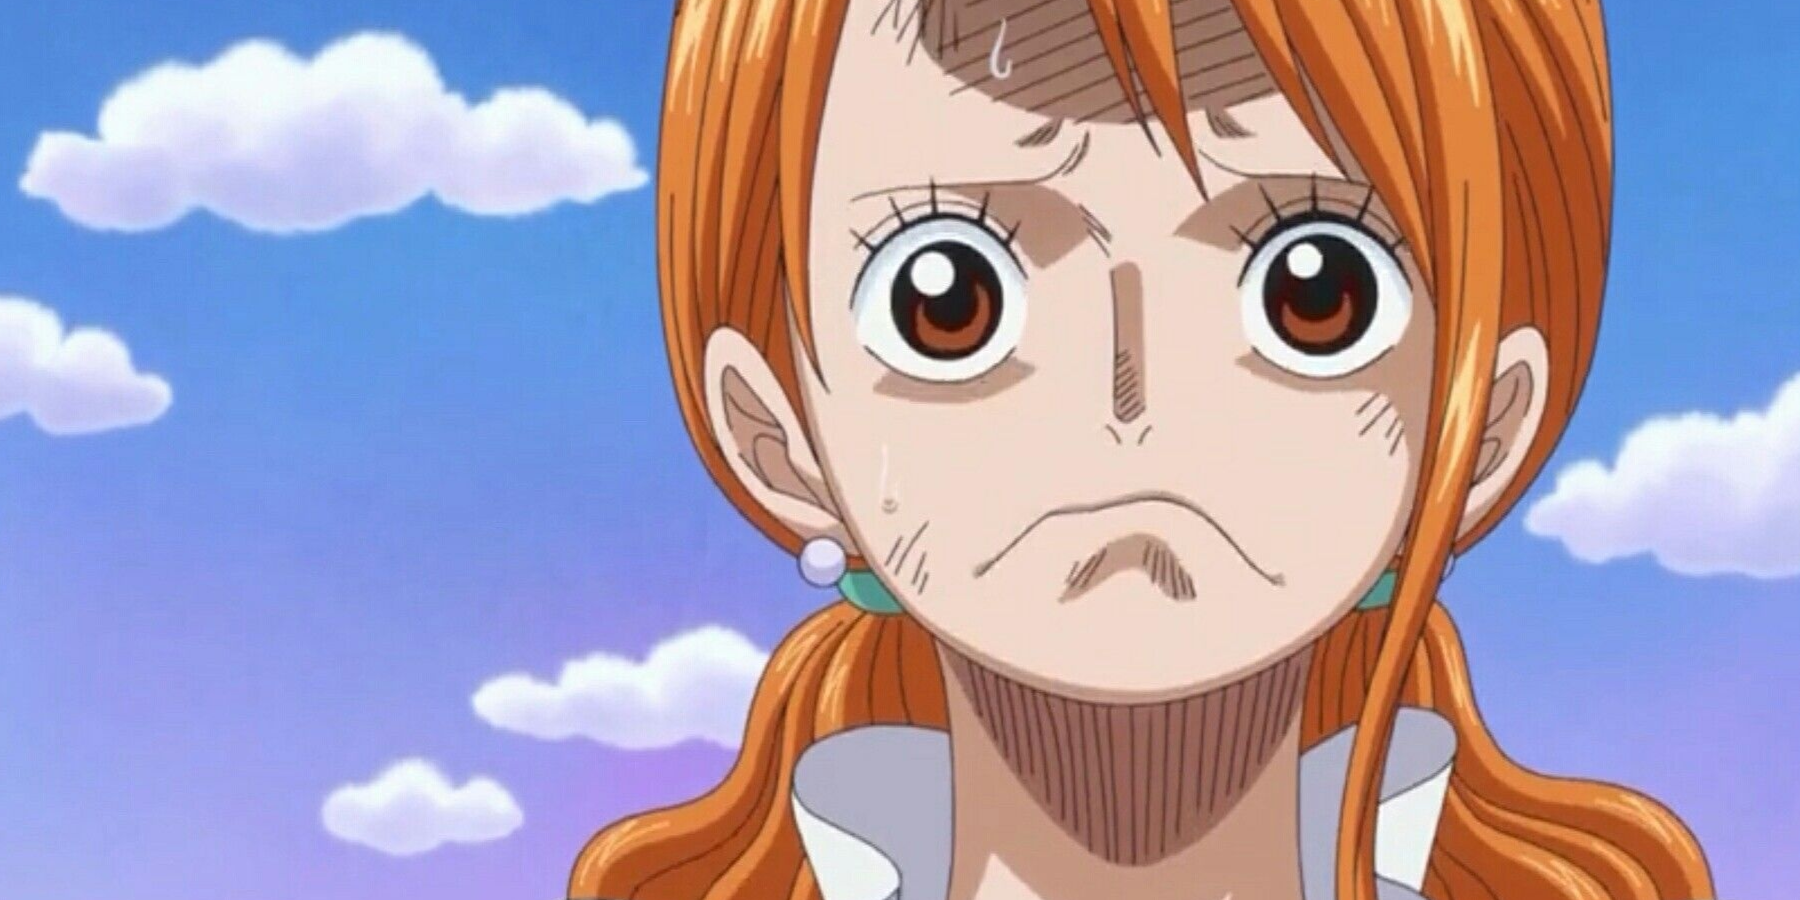 Nami looking upset in One Piece